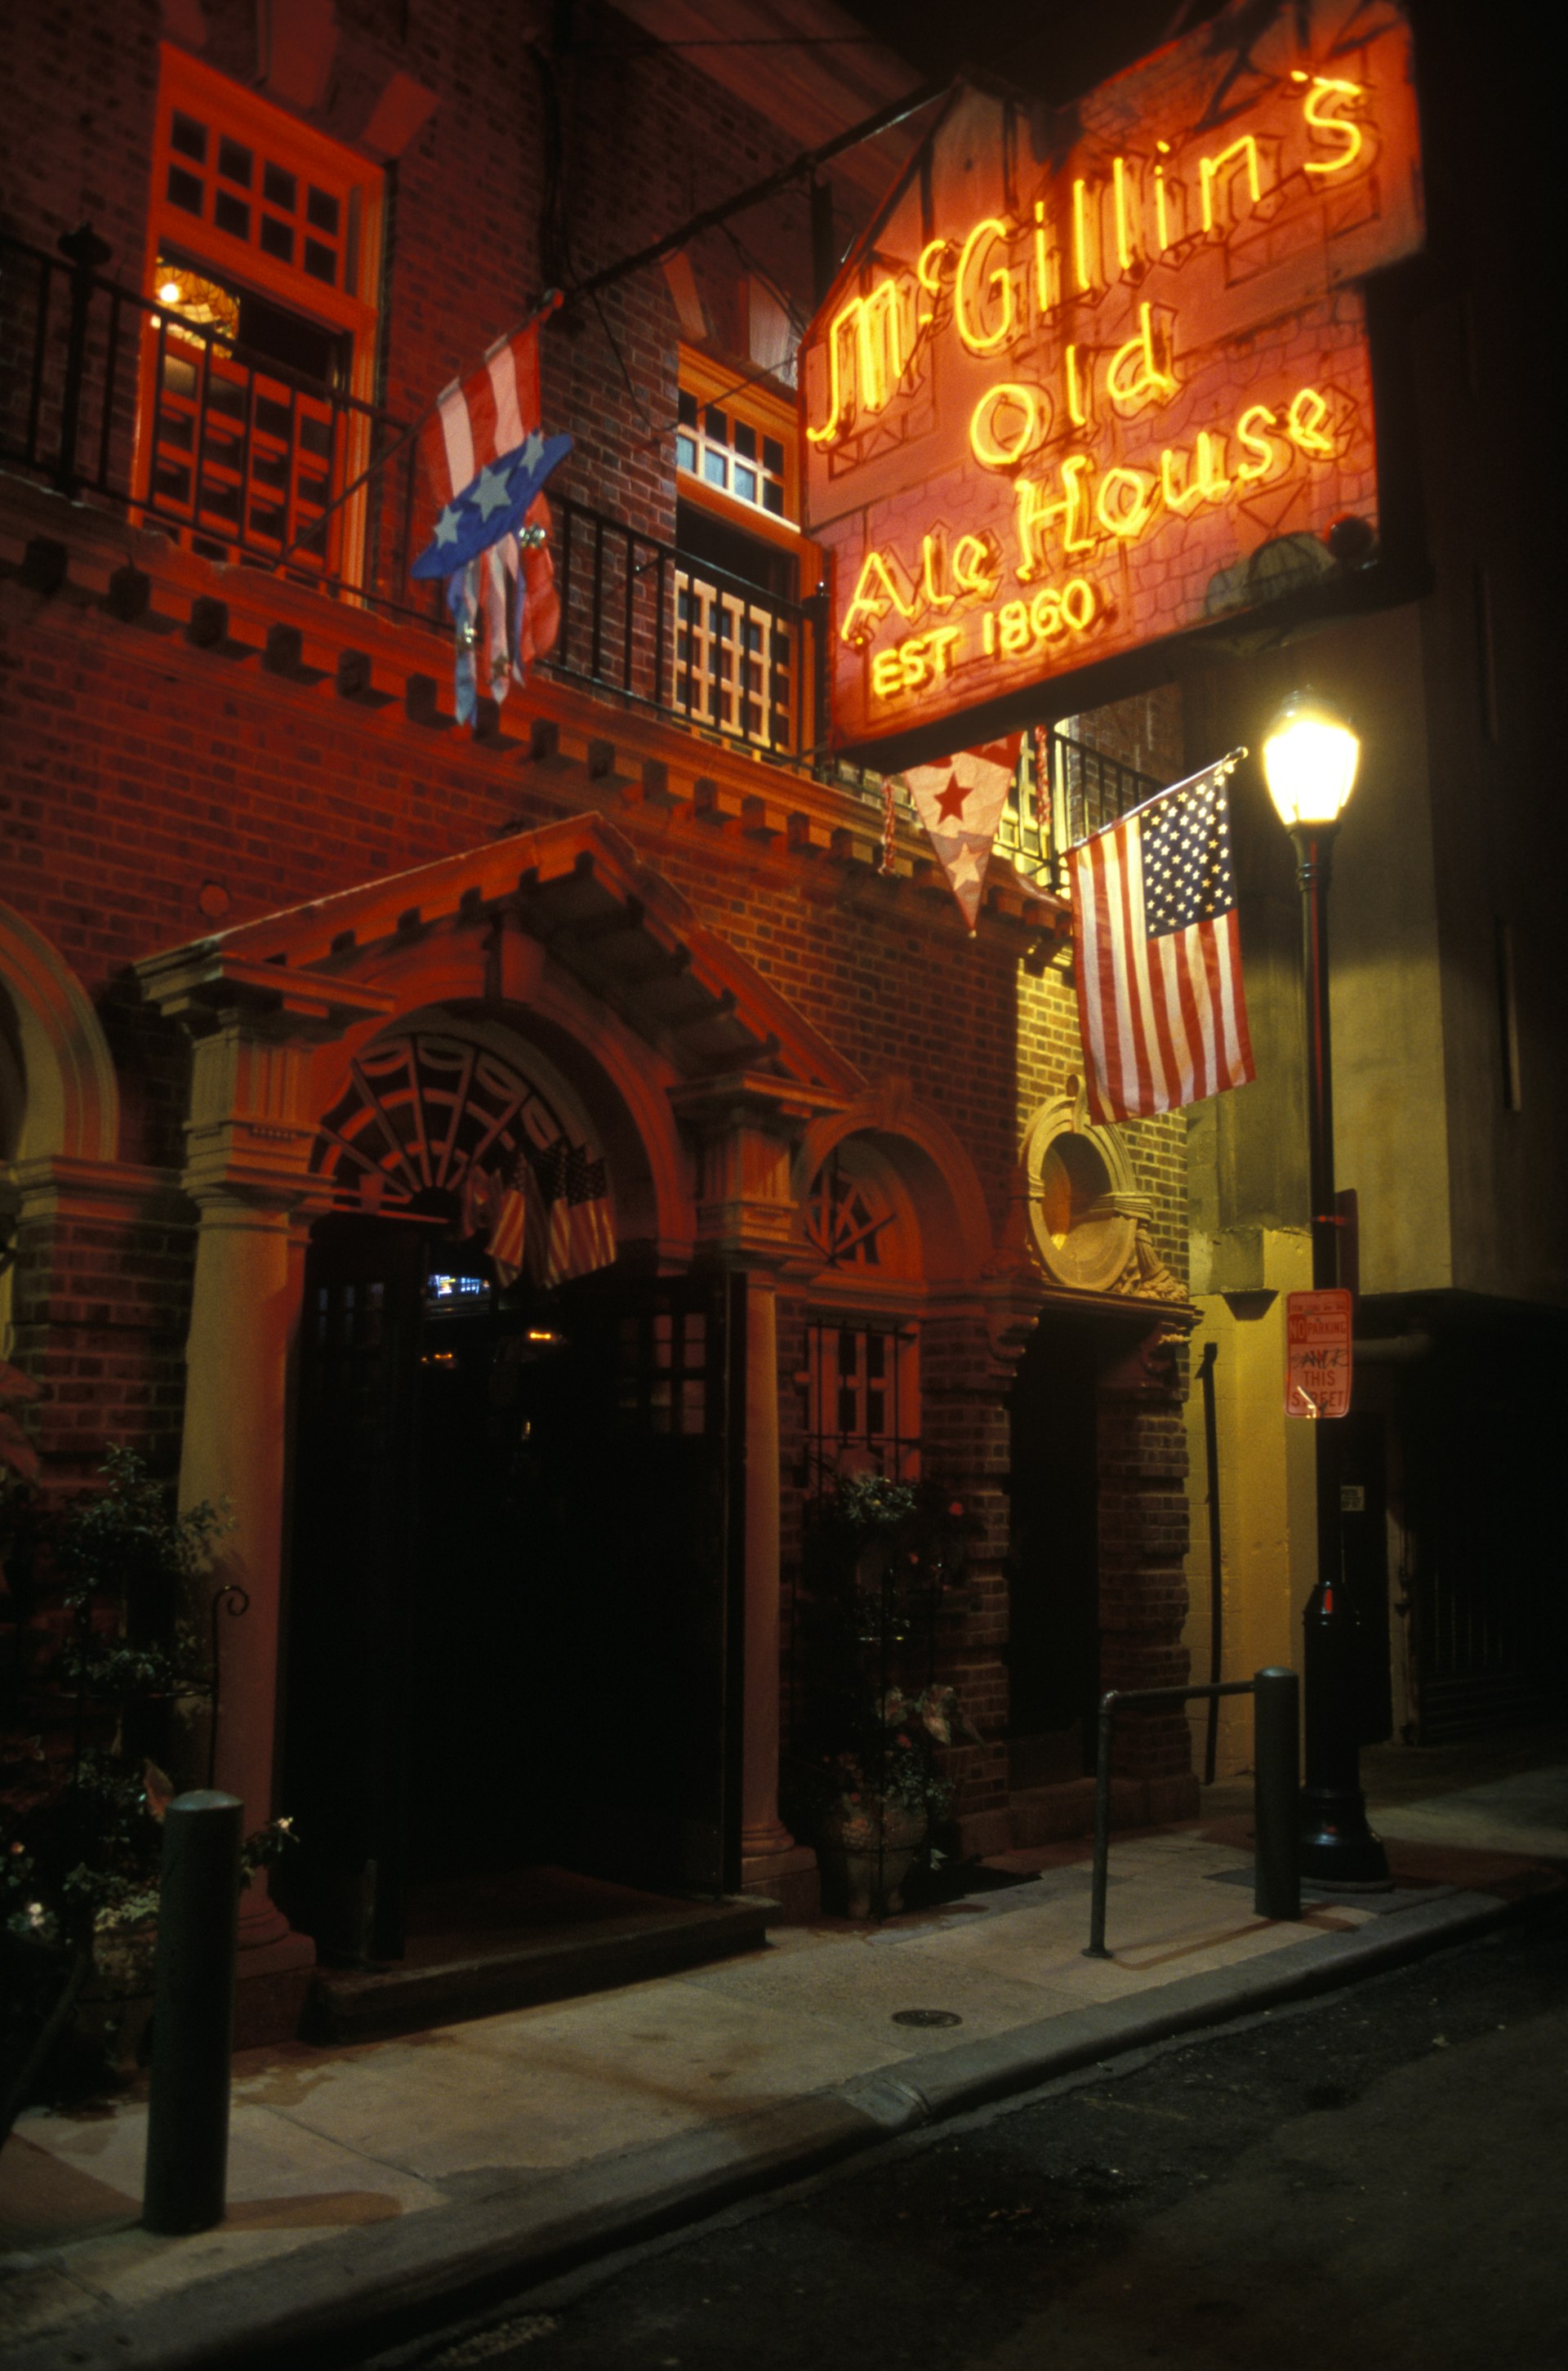 A neon sign that says 'McGillin's Old Ale House est 1860' hangs above the establishment 